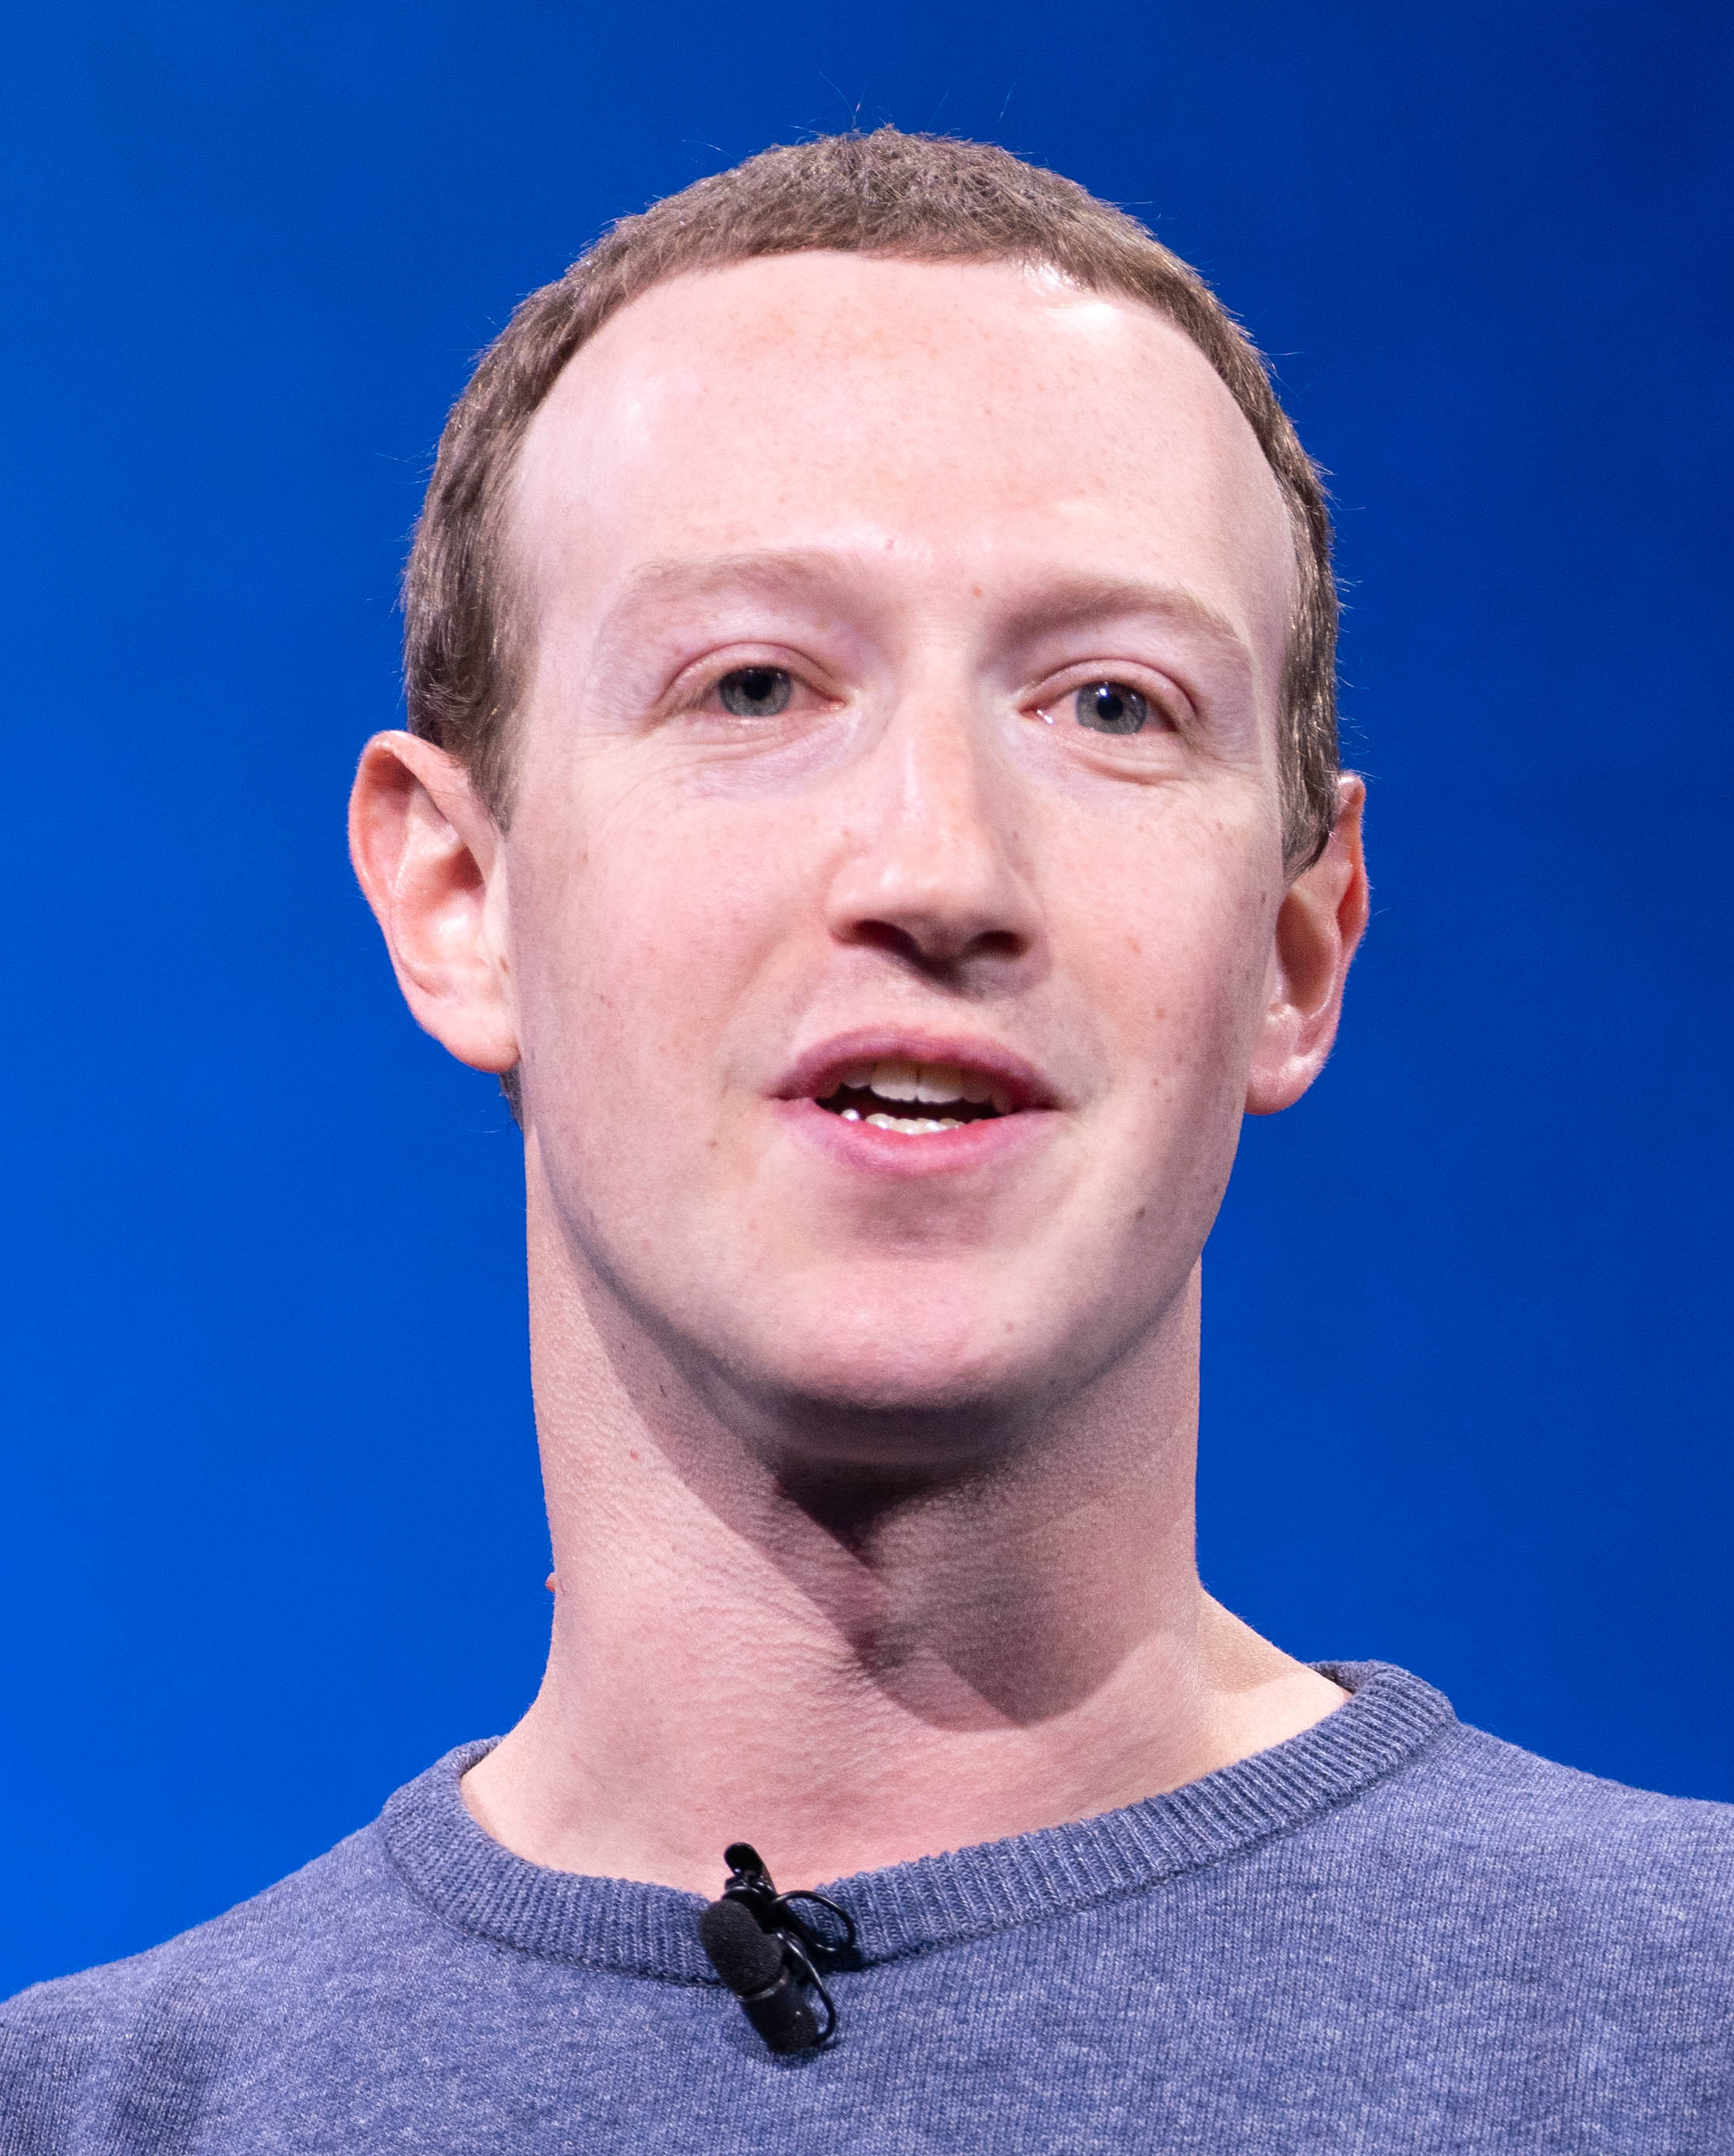 Mark_Zuckerberg_F8_2019_Keynote_%2832830578717%29_%28cropped%29.jpg